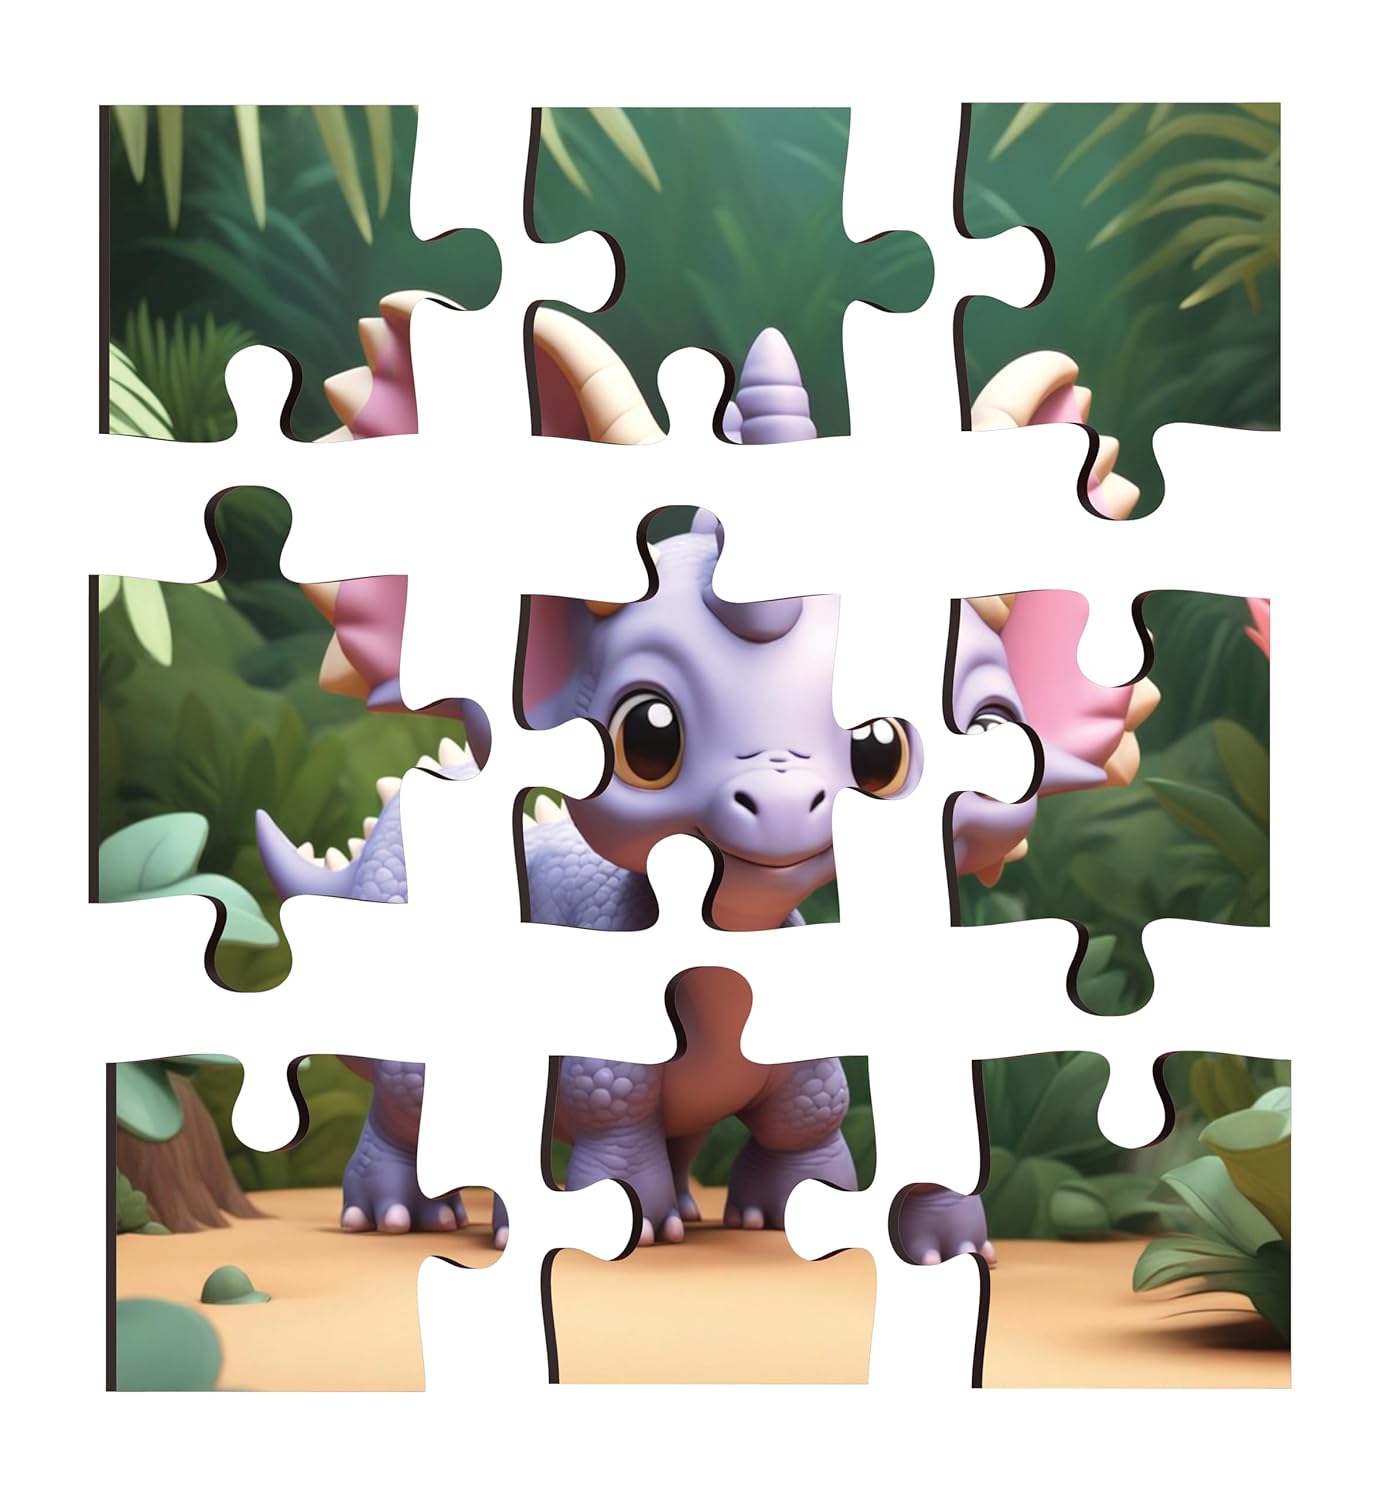 Kid's Wooden Animal Kingdom Jigsaw Puzzle